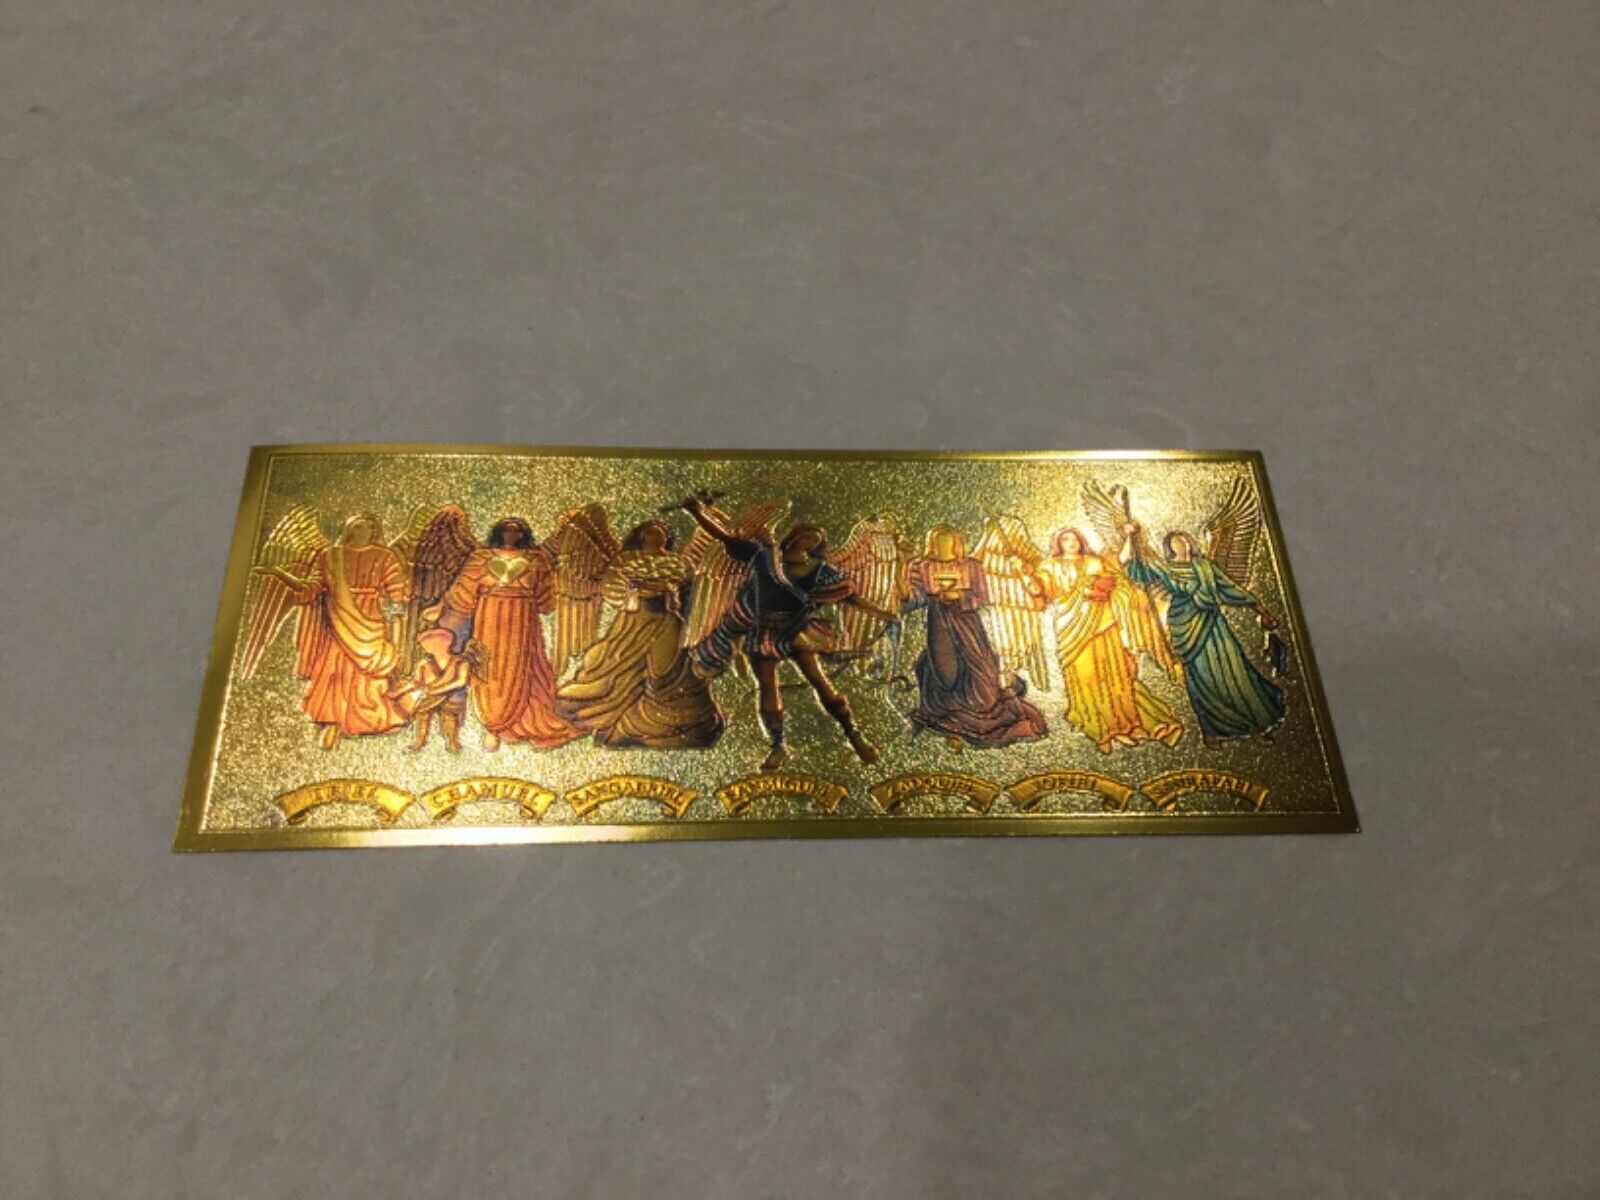 7 Archangels - 7 Acangeles - Gold Color Wallet billl - Money & Protection 1 pc